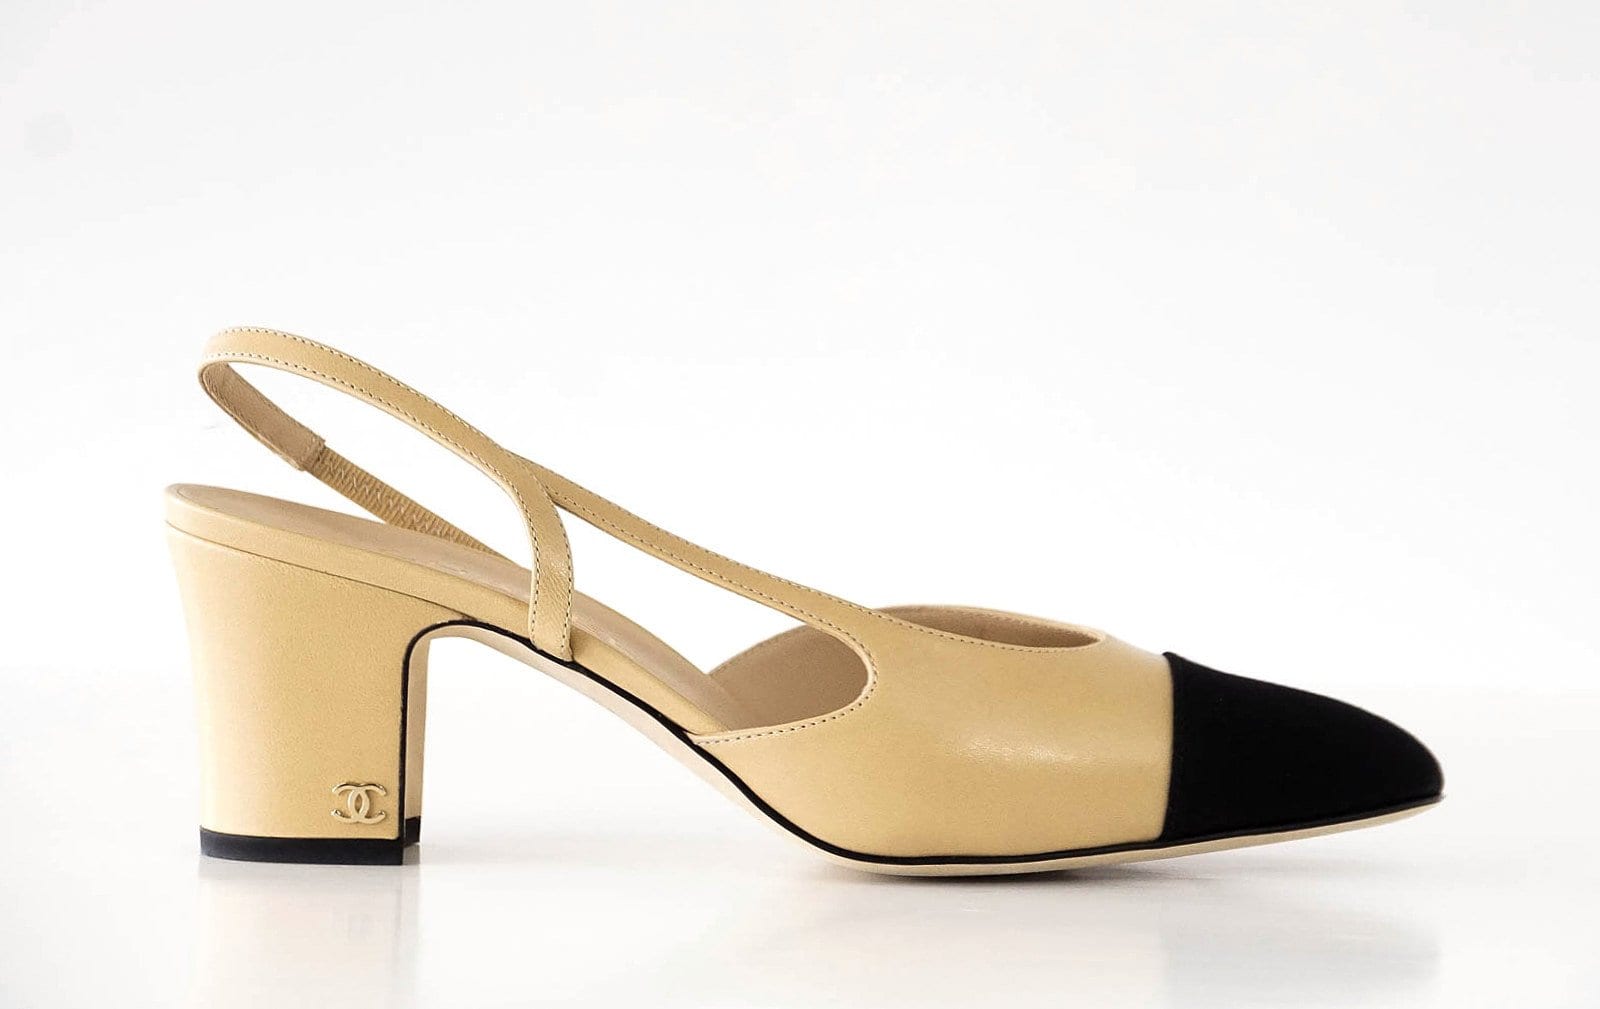 Chanel Shoe Mademoiselle Leather Camel Black Grosgrain 39.5 / 9.5